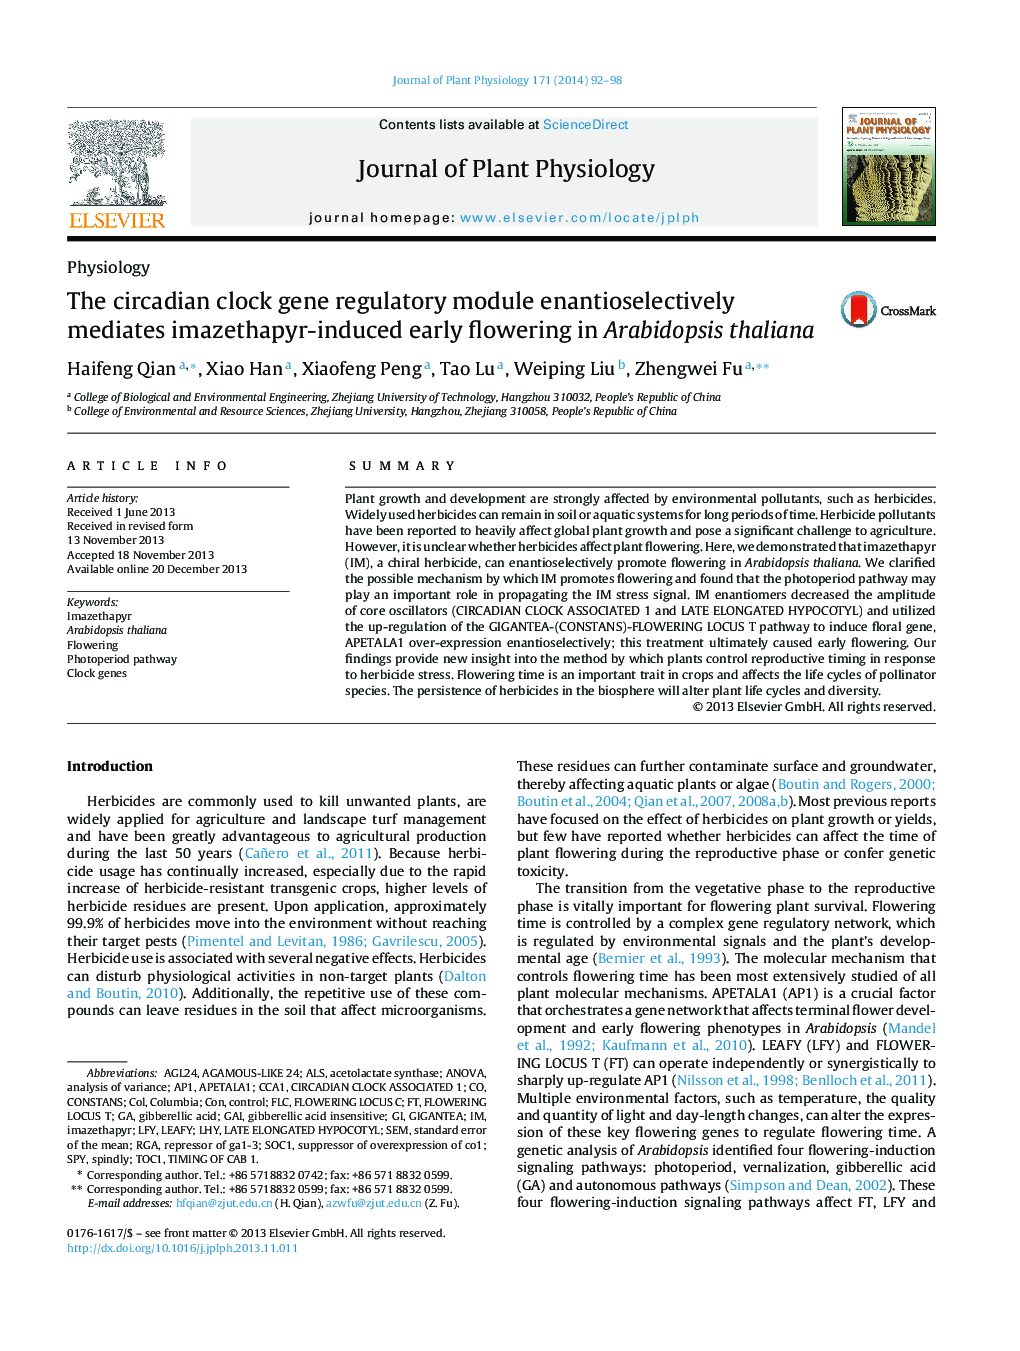 The circadian clock gene regulatory module enantioselectively mediates imazethapyr-induced early flowering in Arabidopsis thaliana